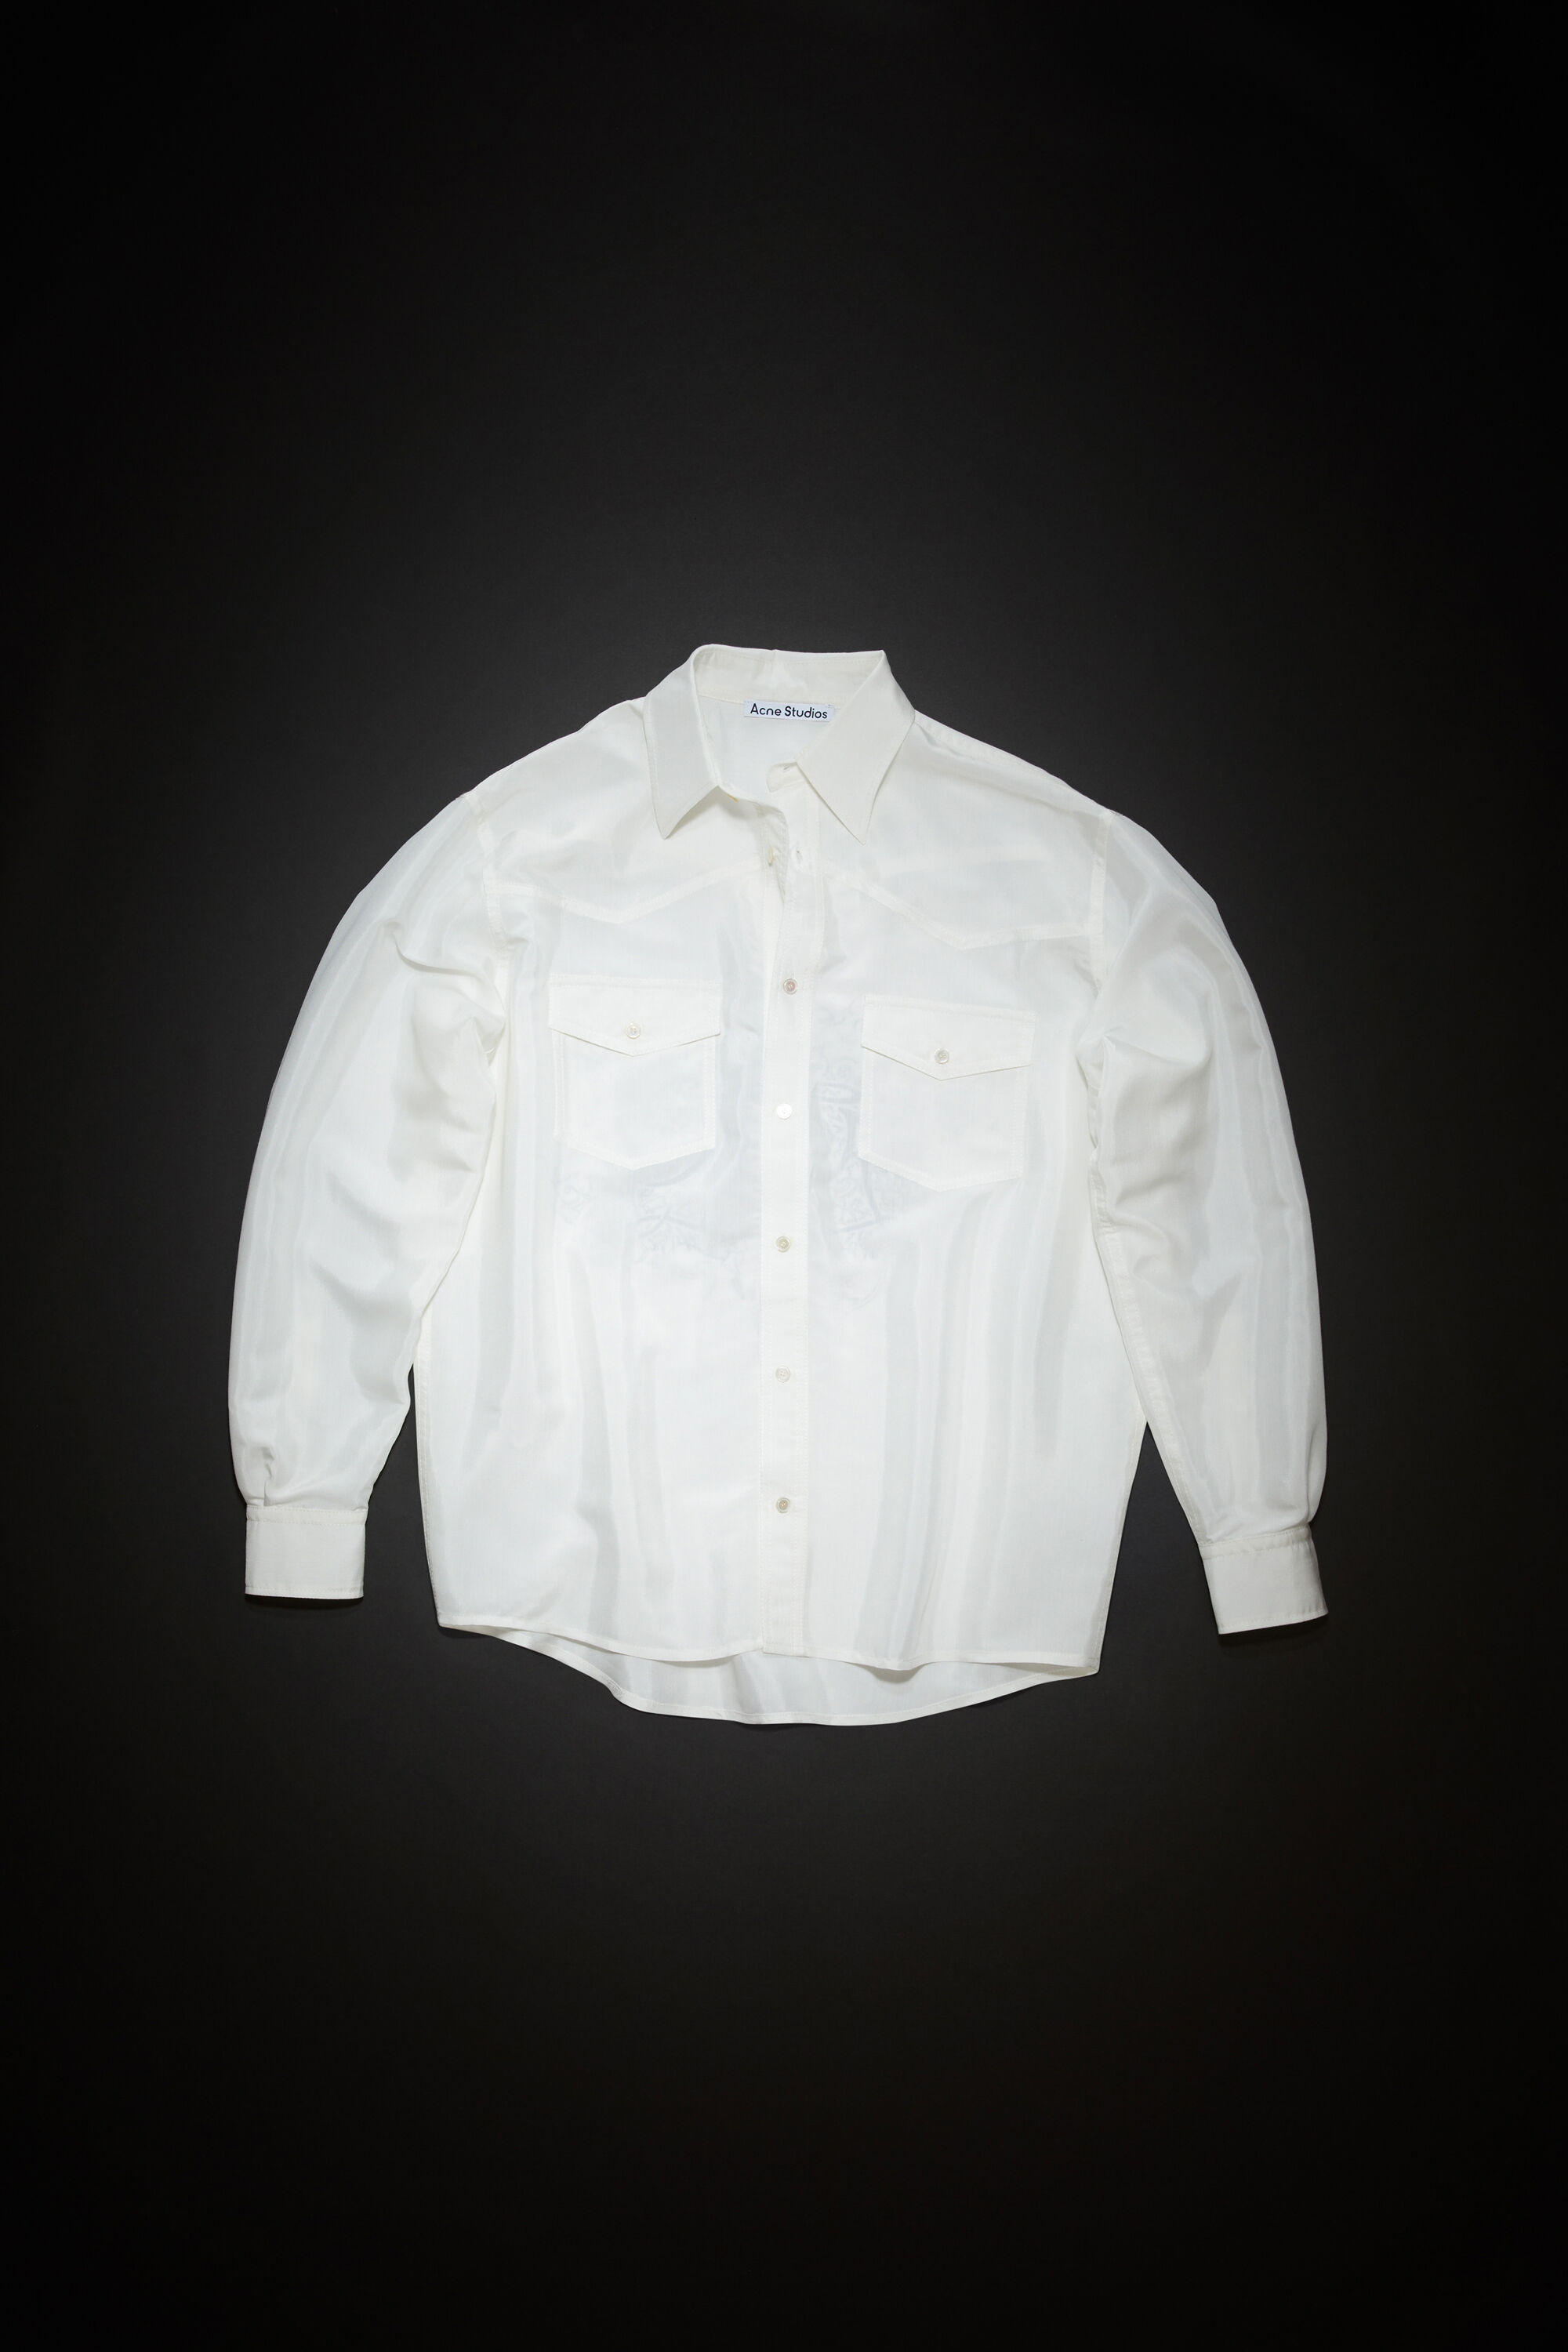 Acne Studios Off-White Button-Up Shirt